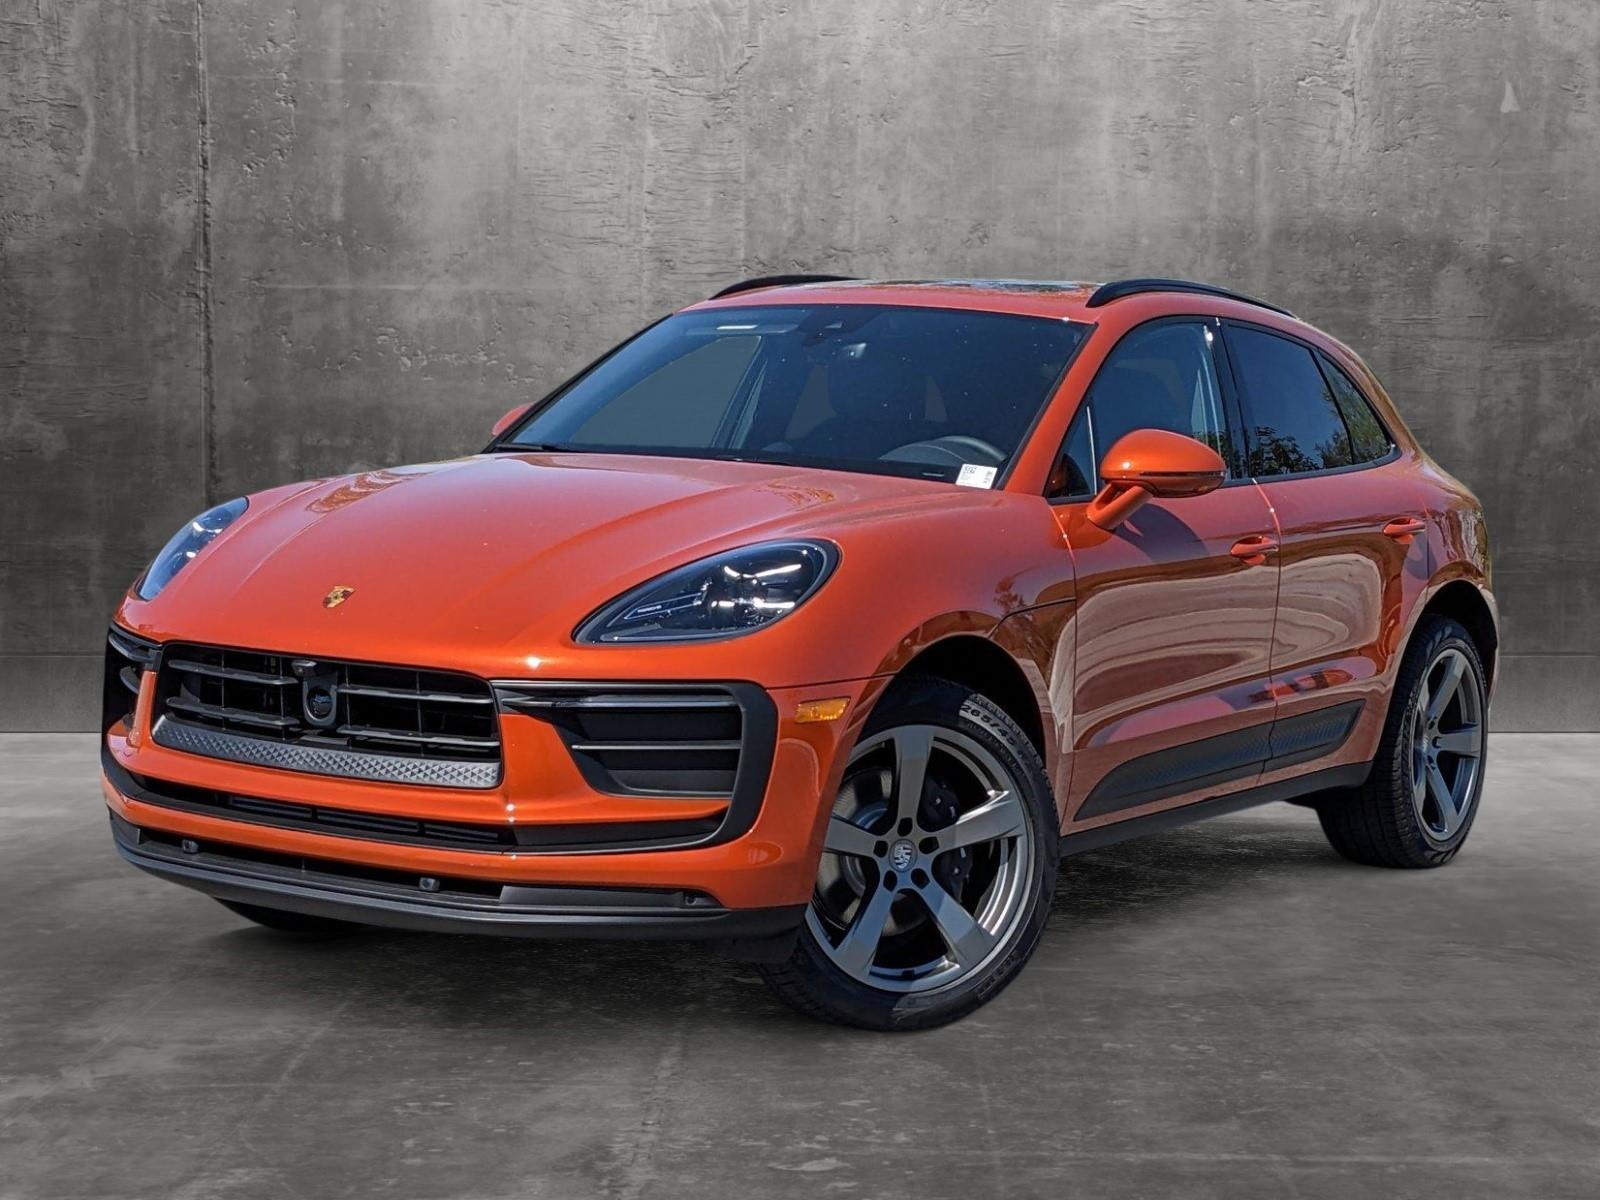 New Porsche Macan for Sale in Orange County, CA